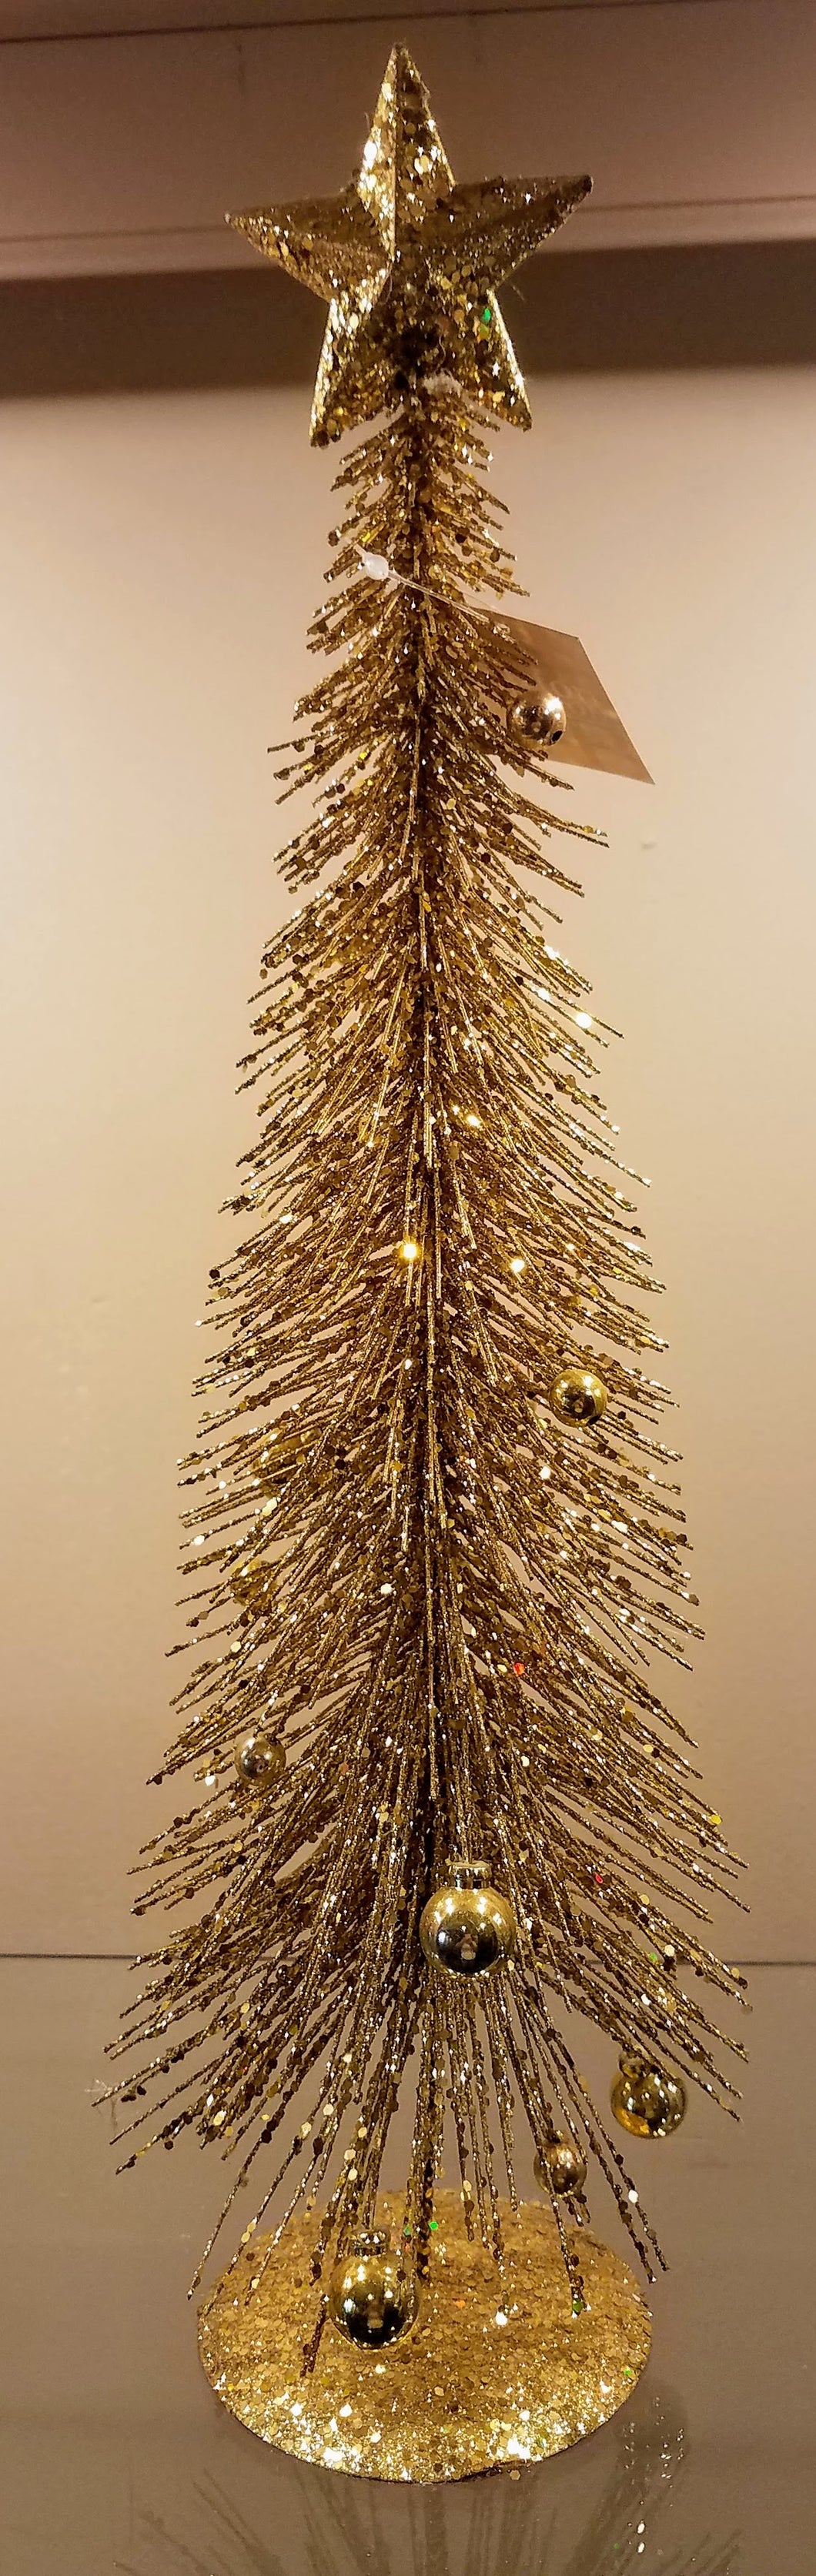 Acrylic gold tree/ star/ornaments 20